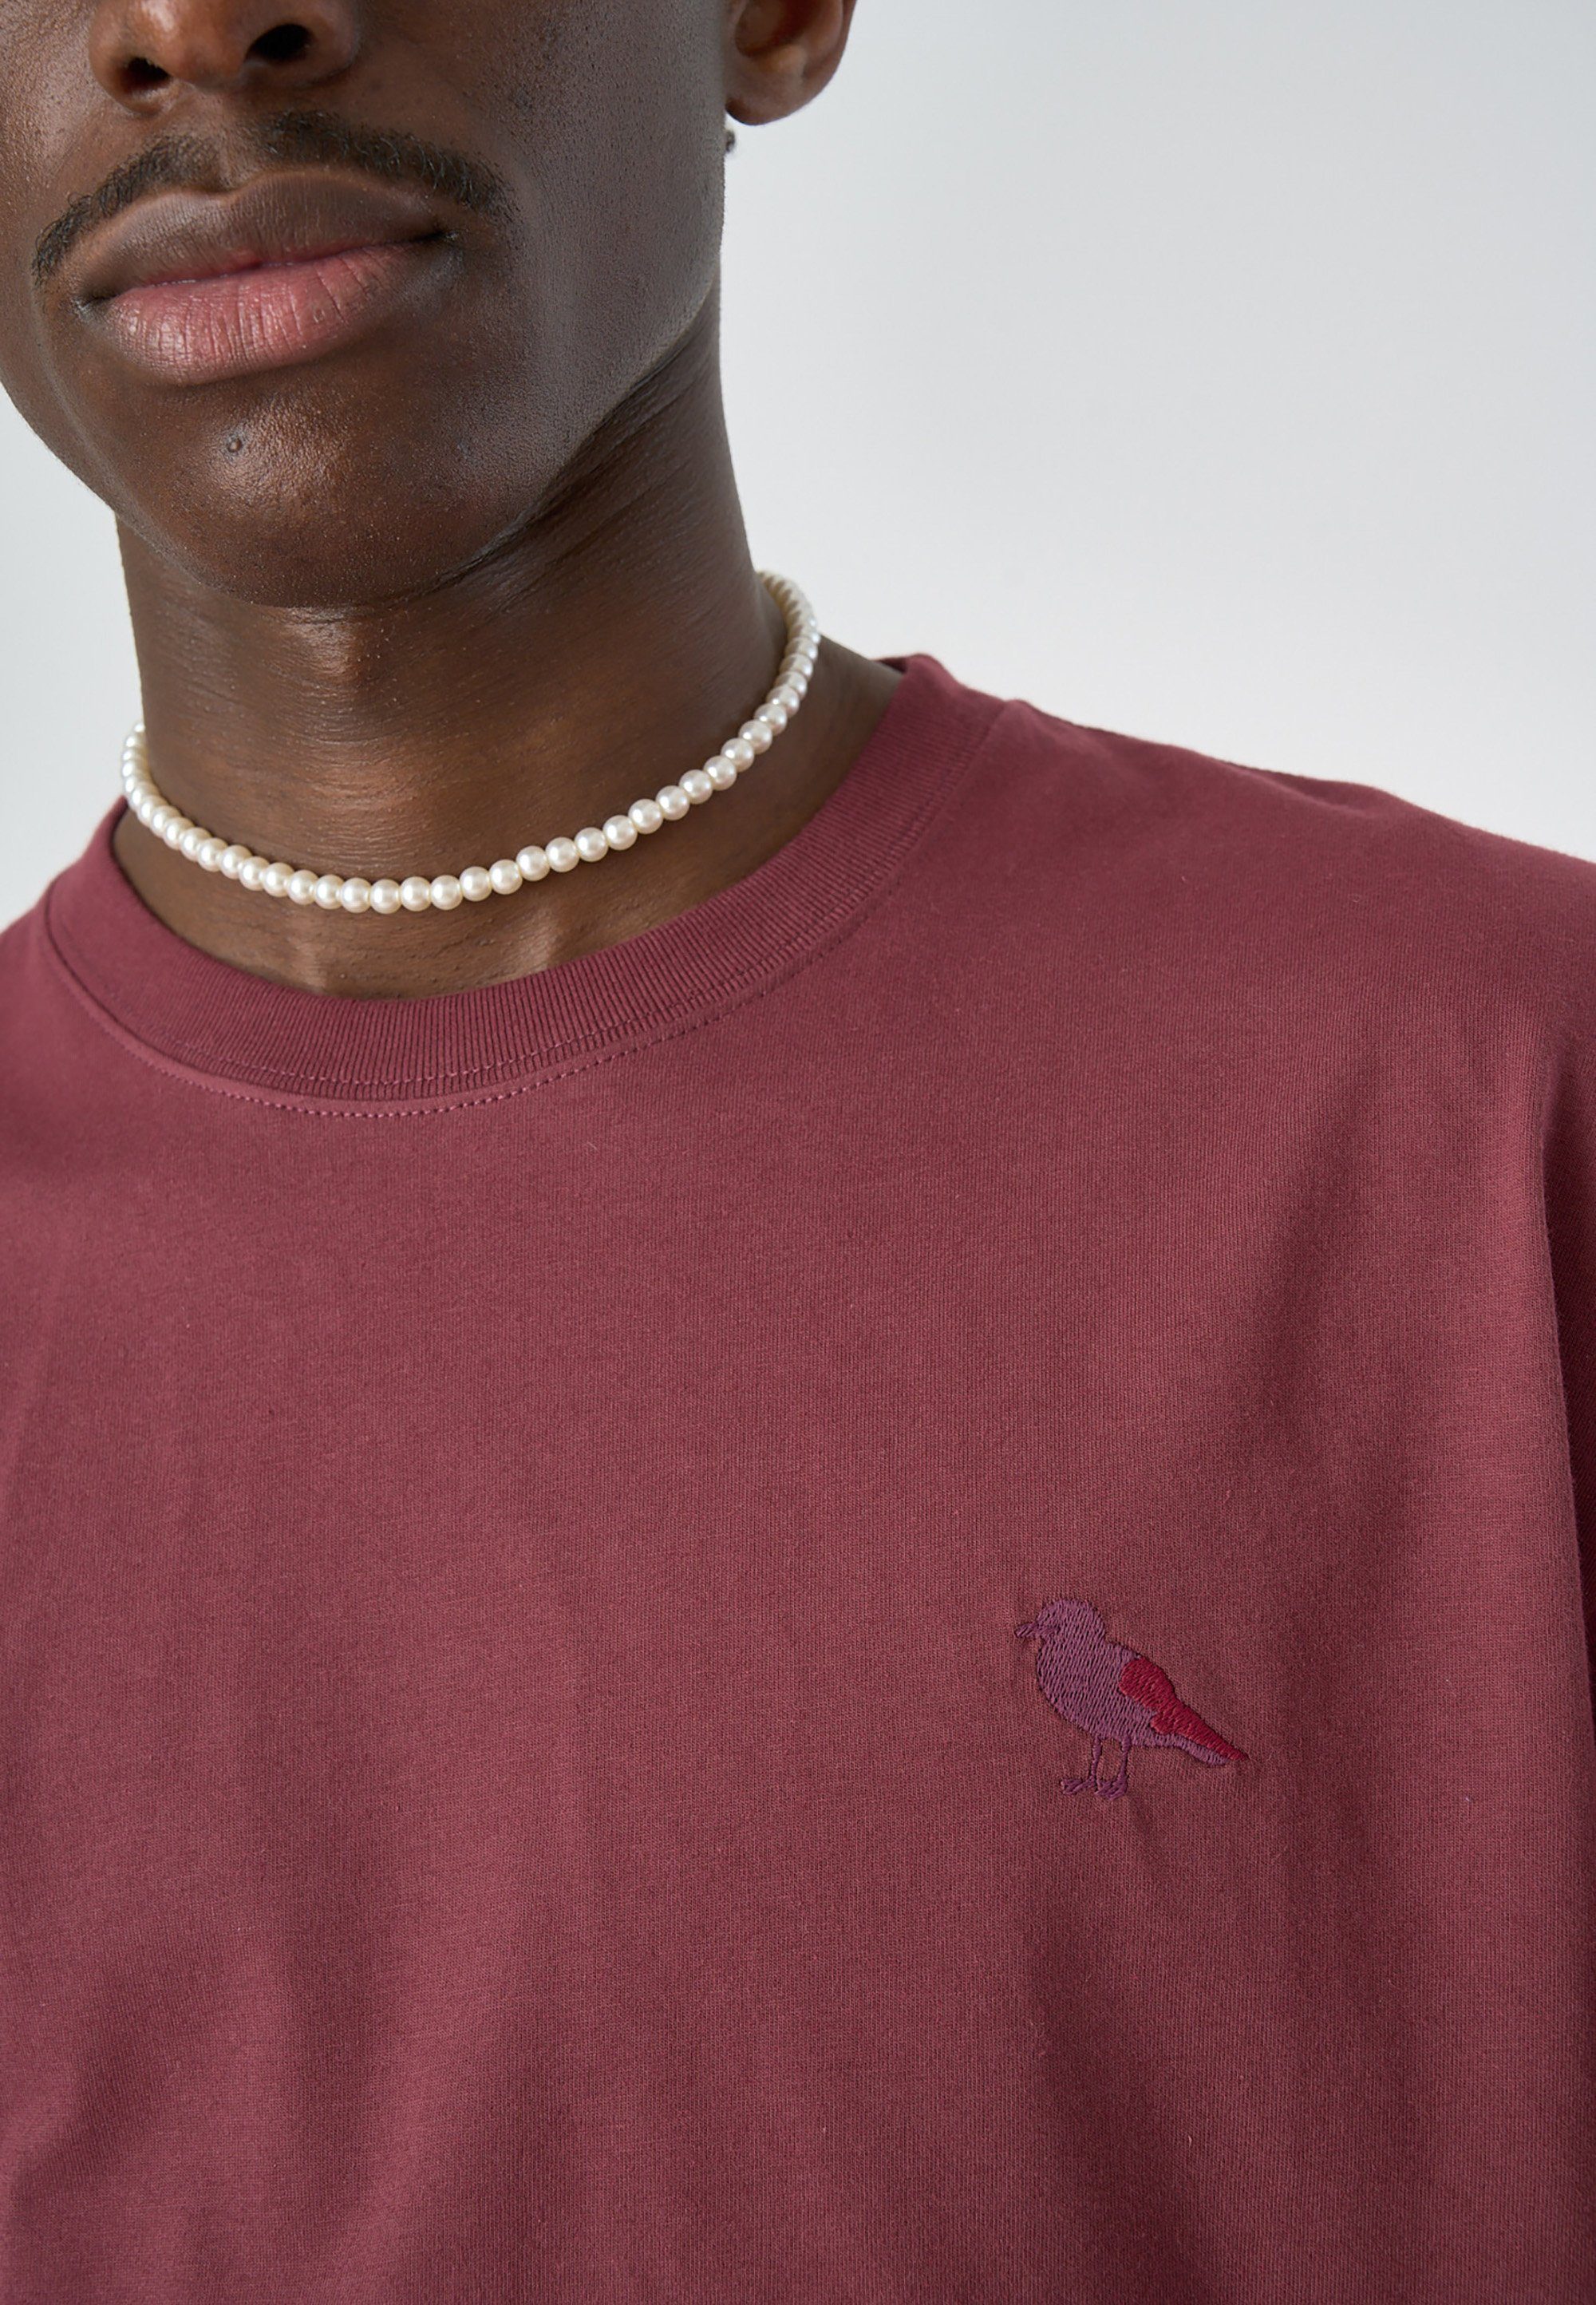 hellgrün Embroidery lockerem Schnitt Cleptomanicx T-Shirt Mono Gull mit